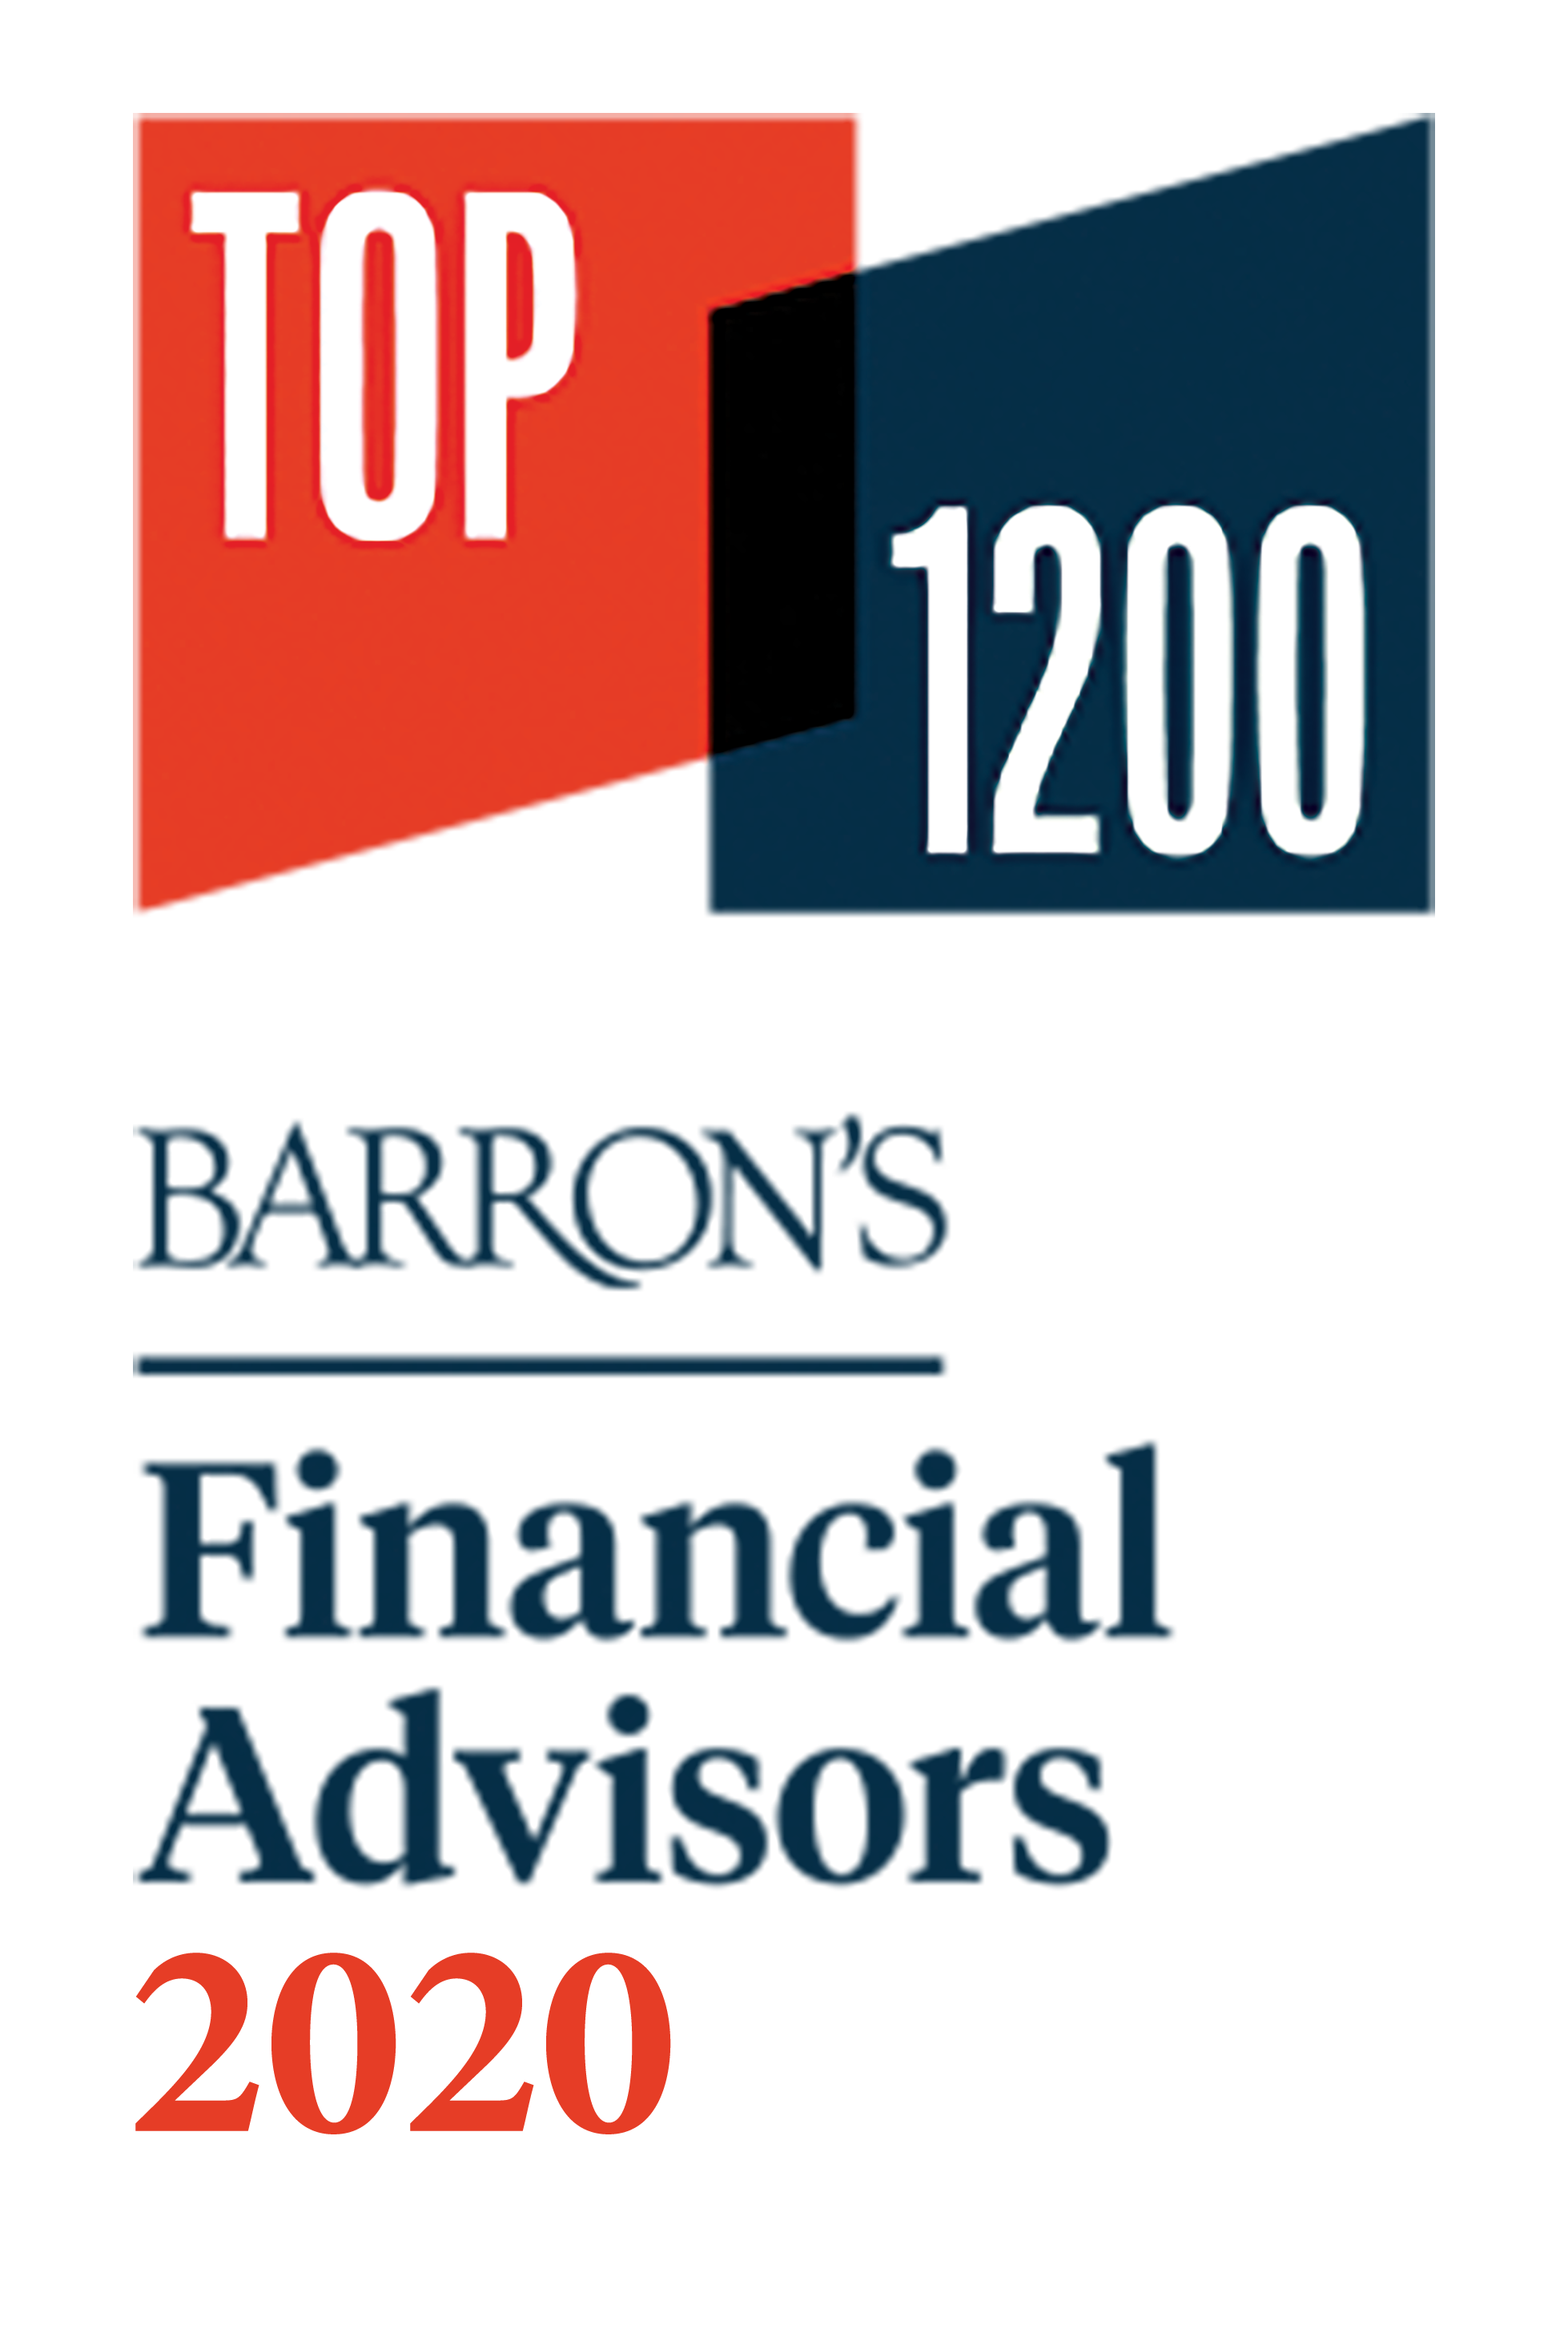 Barrons Top 1200 Advisors